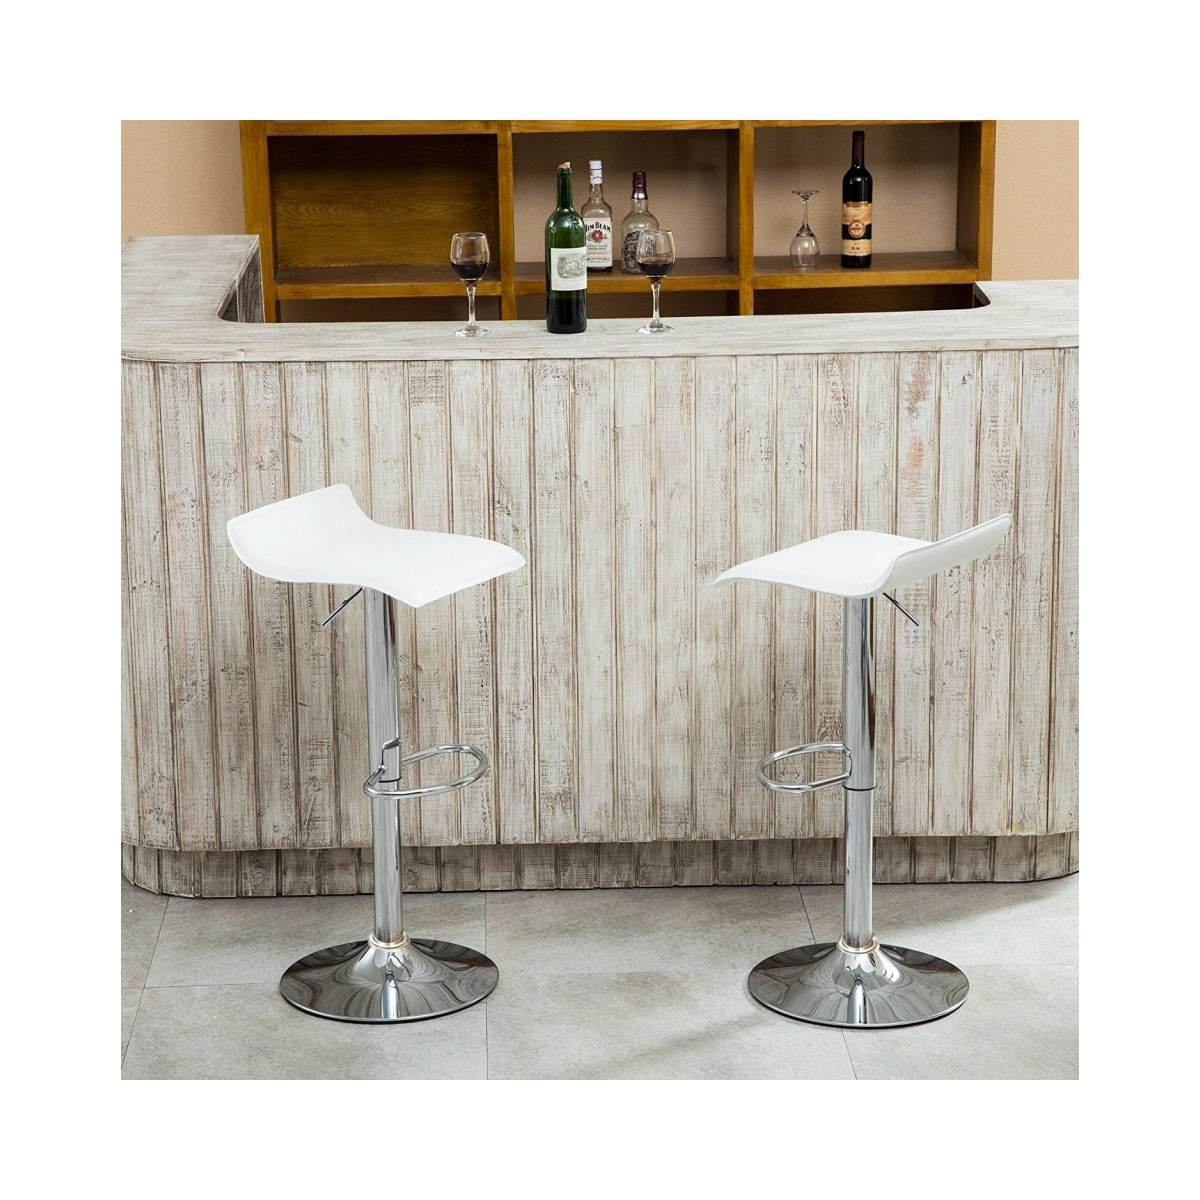 Elecwish white bar stool OW002 display scene